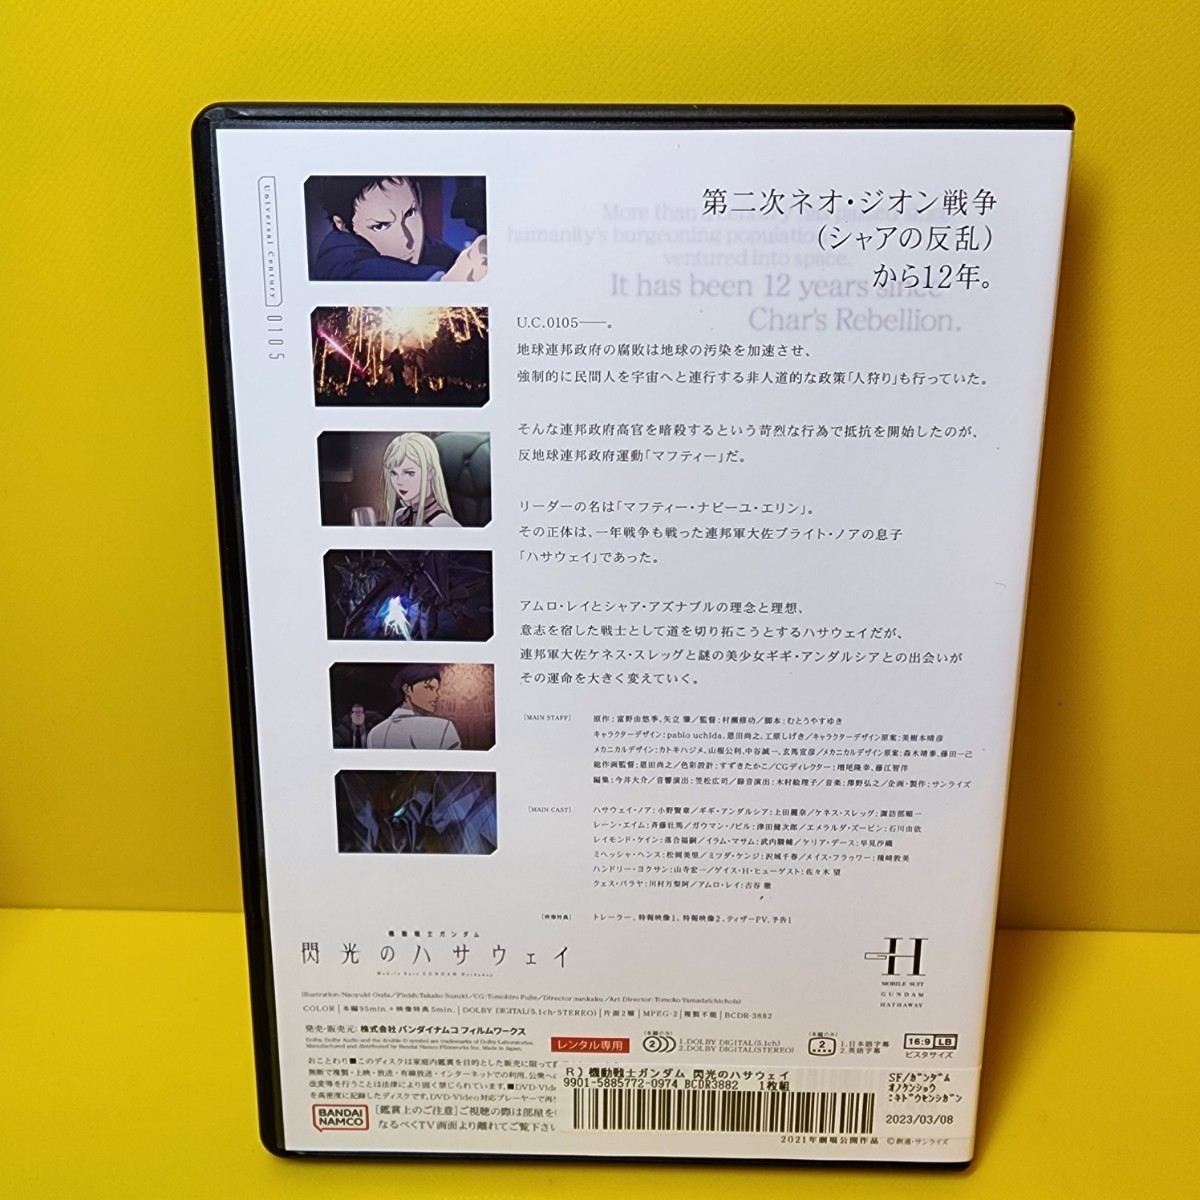  новый товар кейс заменен [ Mobile Suit Gundam . свет. - sa way (\'21 Sunrise )]② DVD